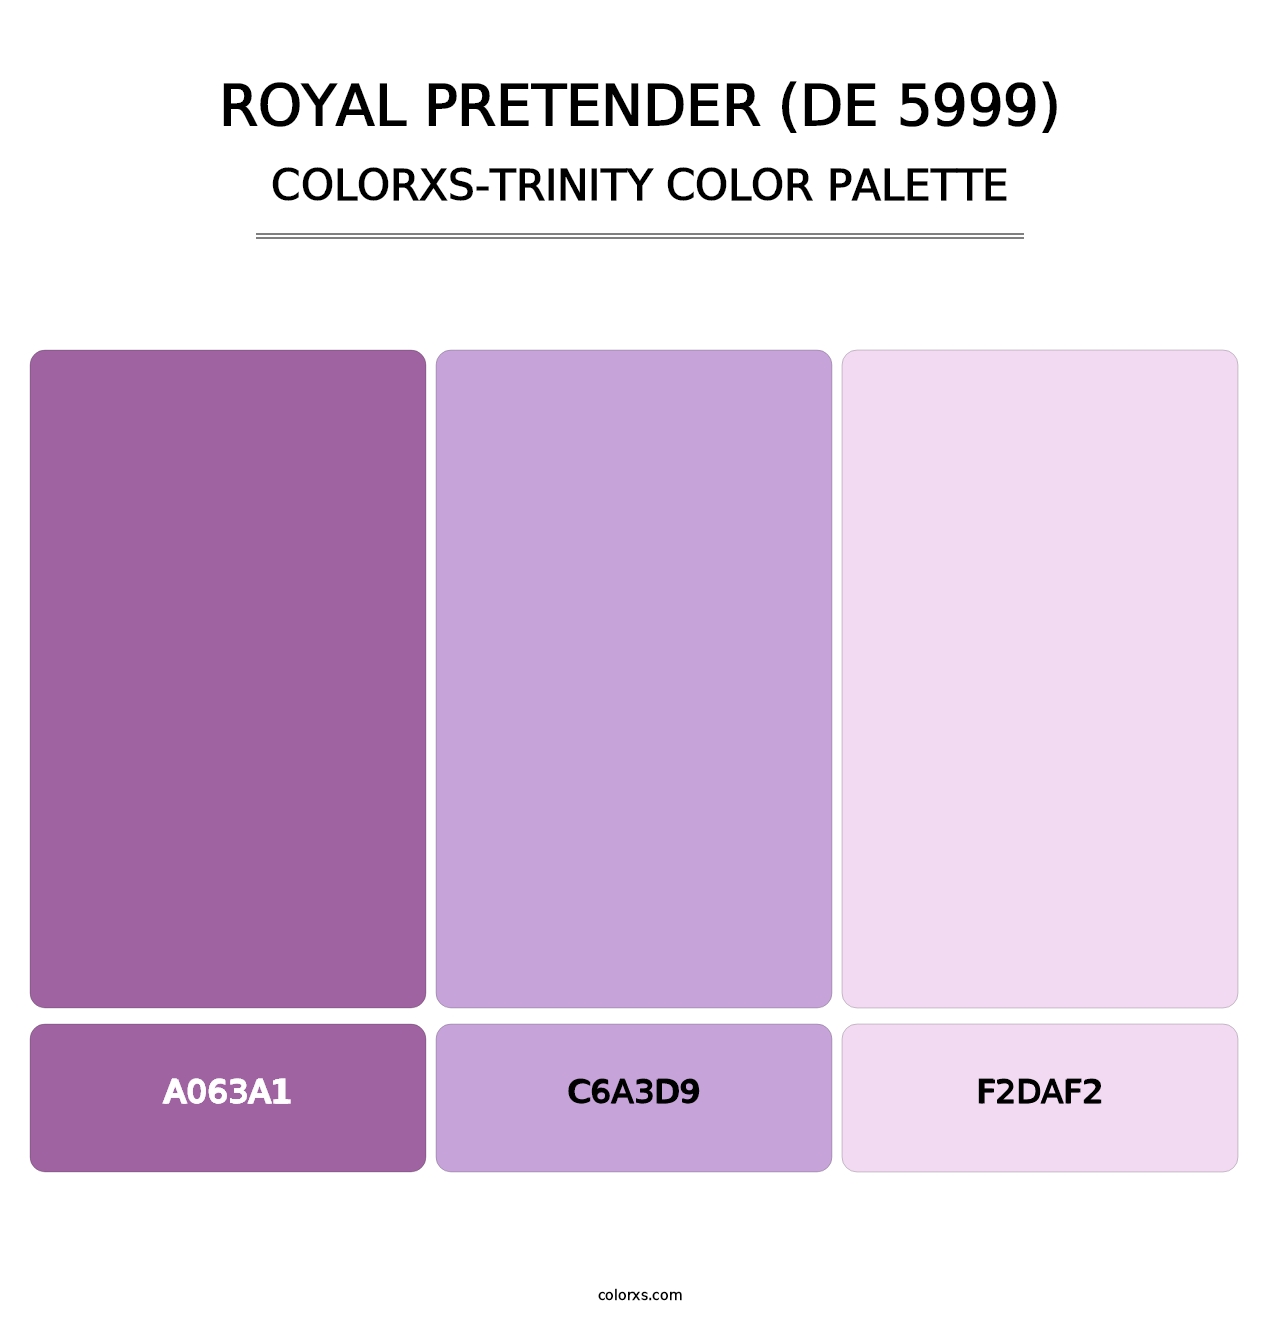 Royal Pretender (DE 5999) - Colorxs Trinity Palette